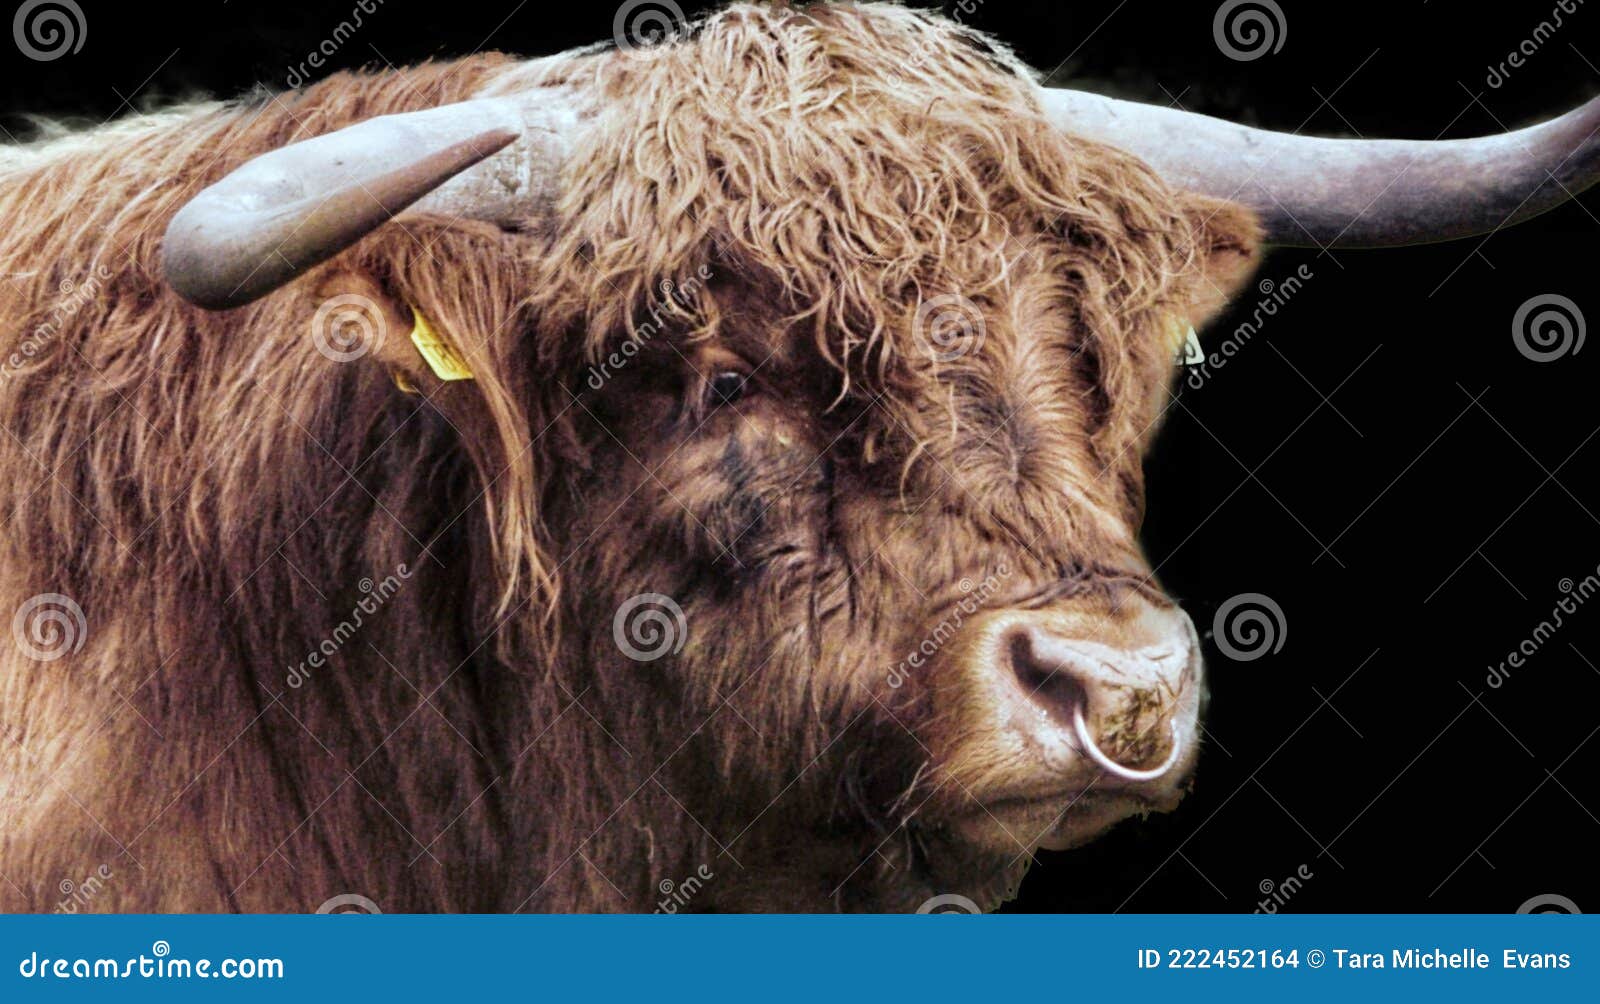 bull ring - Animal Stock Photos - Kimballstock